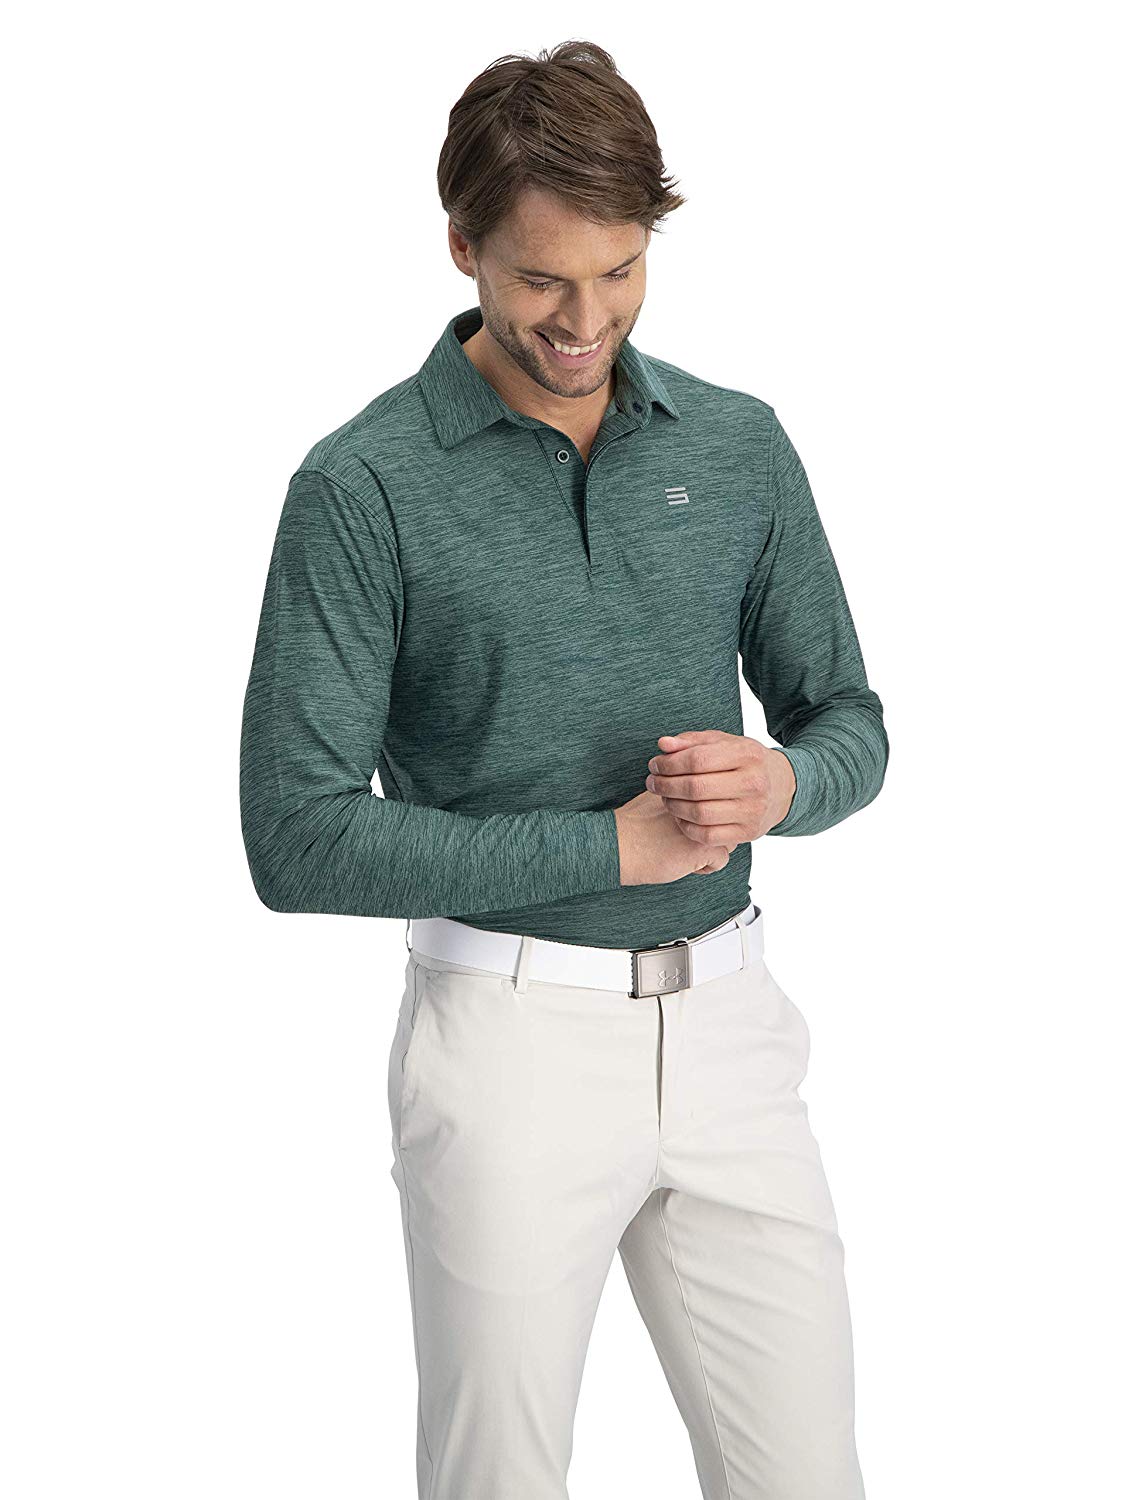 Best Golf Clothing Brands Uk - Best Design Idea